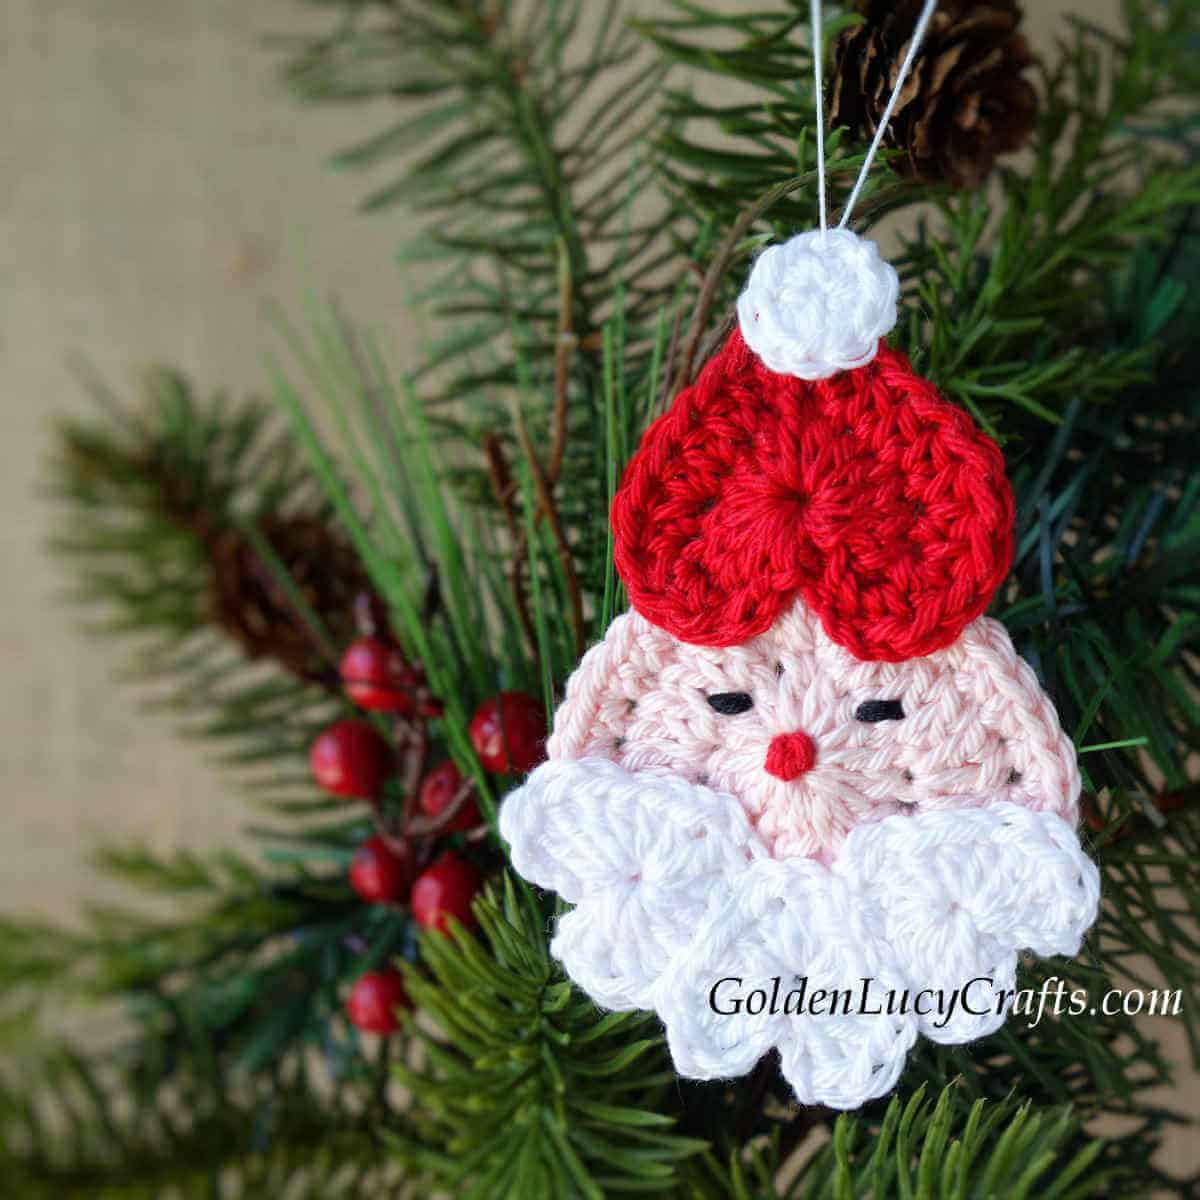 Crochet heart Santa ornament hanging on a Christmas tree.